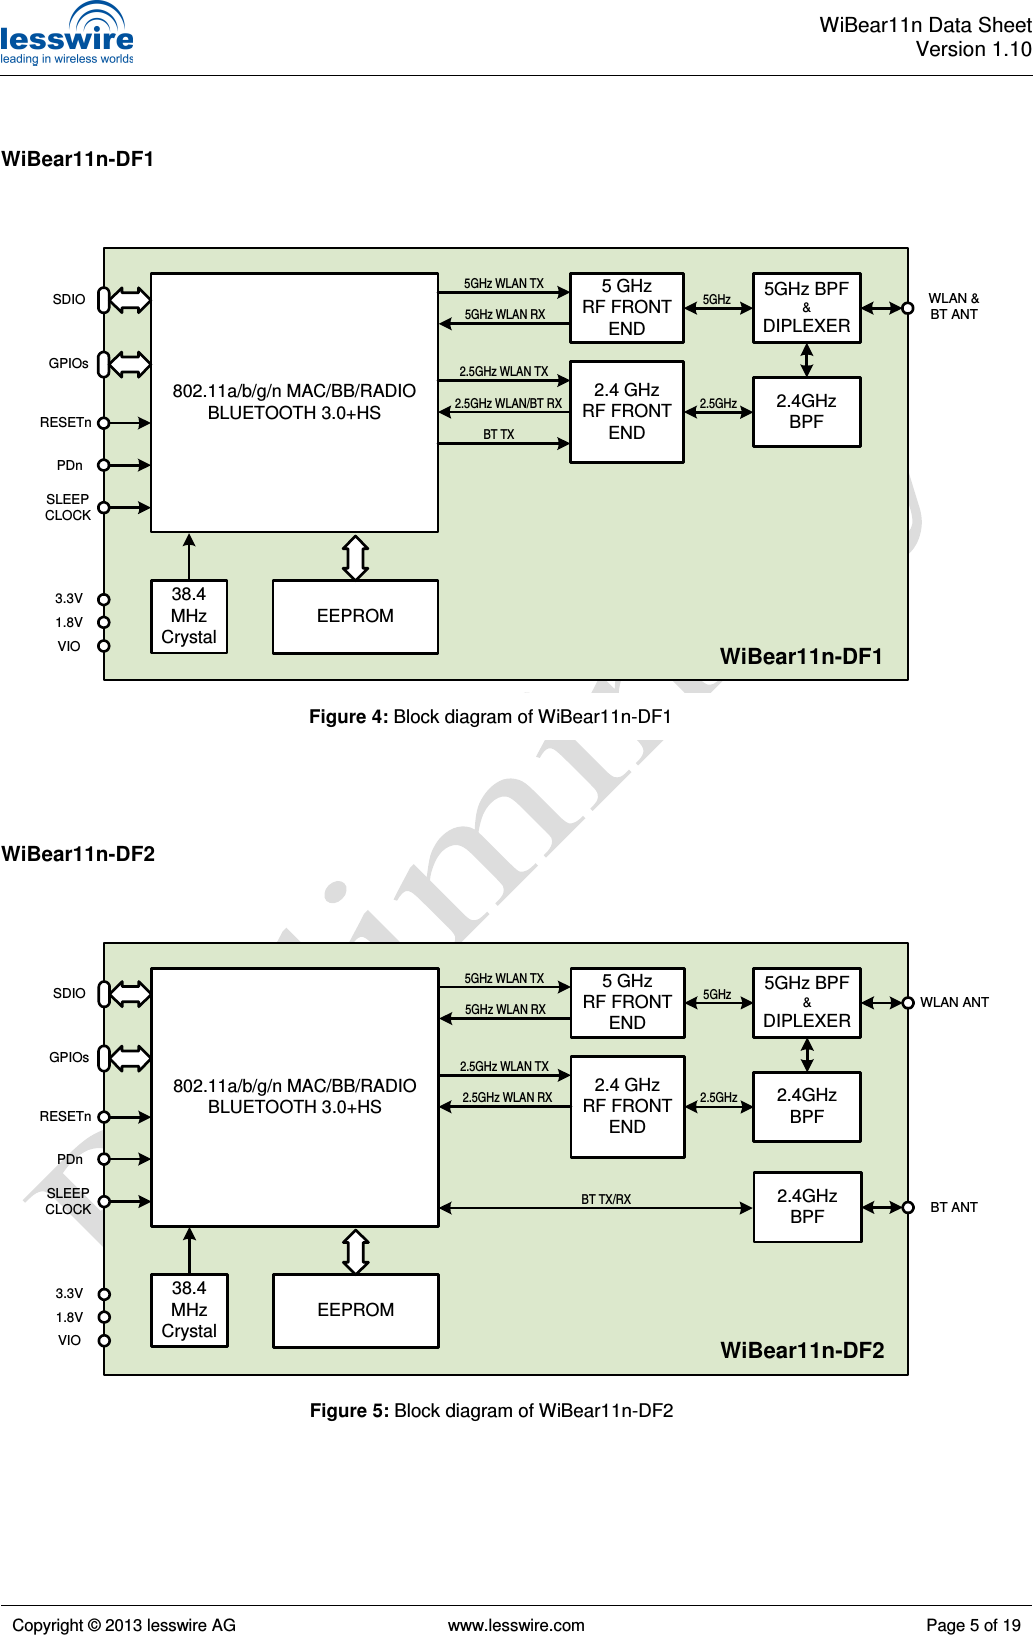  WiBear11n Data SheetVersion 1.10   Copyright © 2013 lesswire AG   www.lesswire.com  Page 5 of 19    WiBear11n-DF1                             WiBear11n-DF2                           802.11a/b/g/n MAC/BB/RADIOBLUETOOTH 3.0+HS2.4 GHzRF FRONTEND2.5GHz WLAN TX2.5GHz WLAN/BT RXBT TXWLAN &amp;BT ANTVIO1.8V3.3V5GHz WLAN TX5GHz WLAN RX5 GHzRF FRONTEND5GHz BPF&amp;DIPLEXER5GHz2.5GHz2.4GHzBPFWiBear11n-DF1EEPROMSDIO38.4MHzCrystalRESETnPDnSLEEPCLOCKGPIOs802.11a/b/g/n MAC/BB/RADIOBLUETOOTH 3.0+HS2.4 GHzRF FRONTEND2.5GHz WLAN TX2.5GHz WLAN RXBT TX/RXWLAN ANTVIO1.8V3.3V5GHz WLAN TX5GHz WLAN RX5 GHzRF FRONTEND5GHz BPF&amp;DIPLEXER5GHz2.5GHz2.4GHzBPFWiBear11n-DF2BT ANT2.4GHzBPFEEPROMSDIO38.4MHzCrystalRESETnPDnSLEEPCLOCKGPIOsFigure 4: Block diagram of WiBear11n-DF1 Figure 5: Block diagram of WiBear11n-DF2 